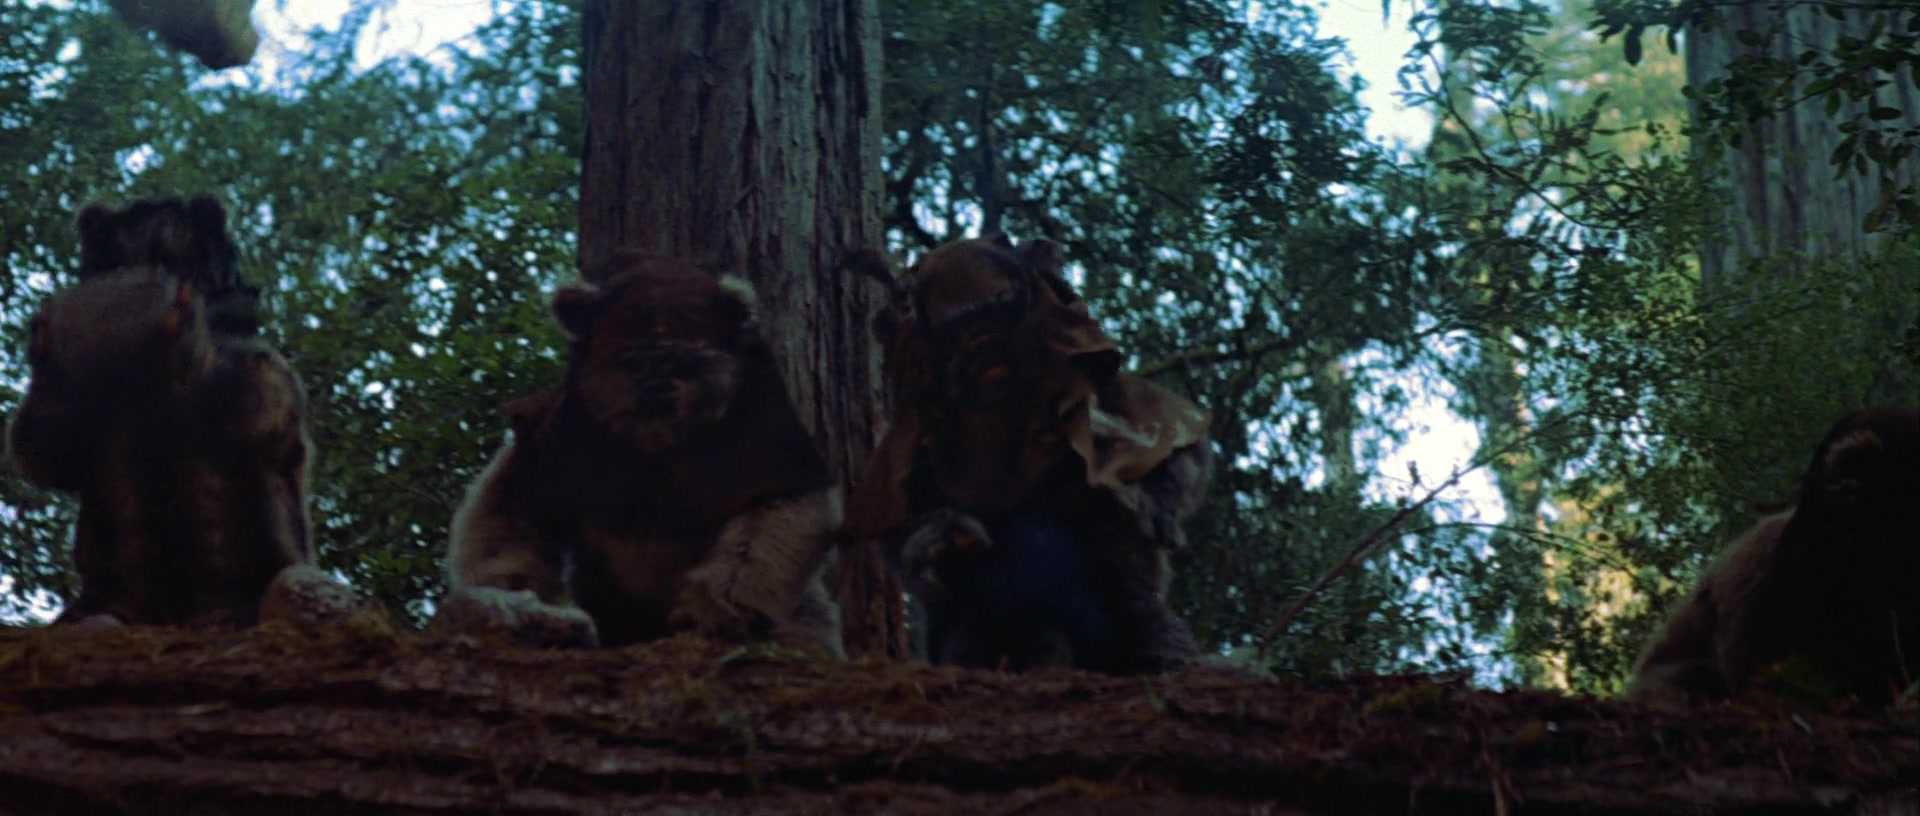 Star Wars Episode VI: Star Wars Return of the Jedi (1983) .